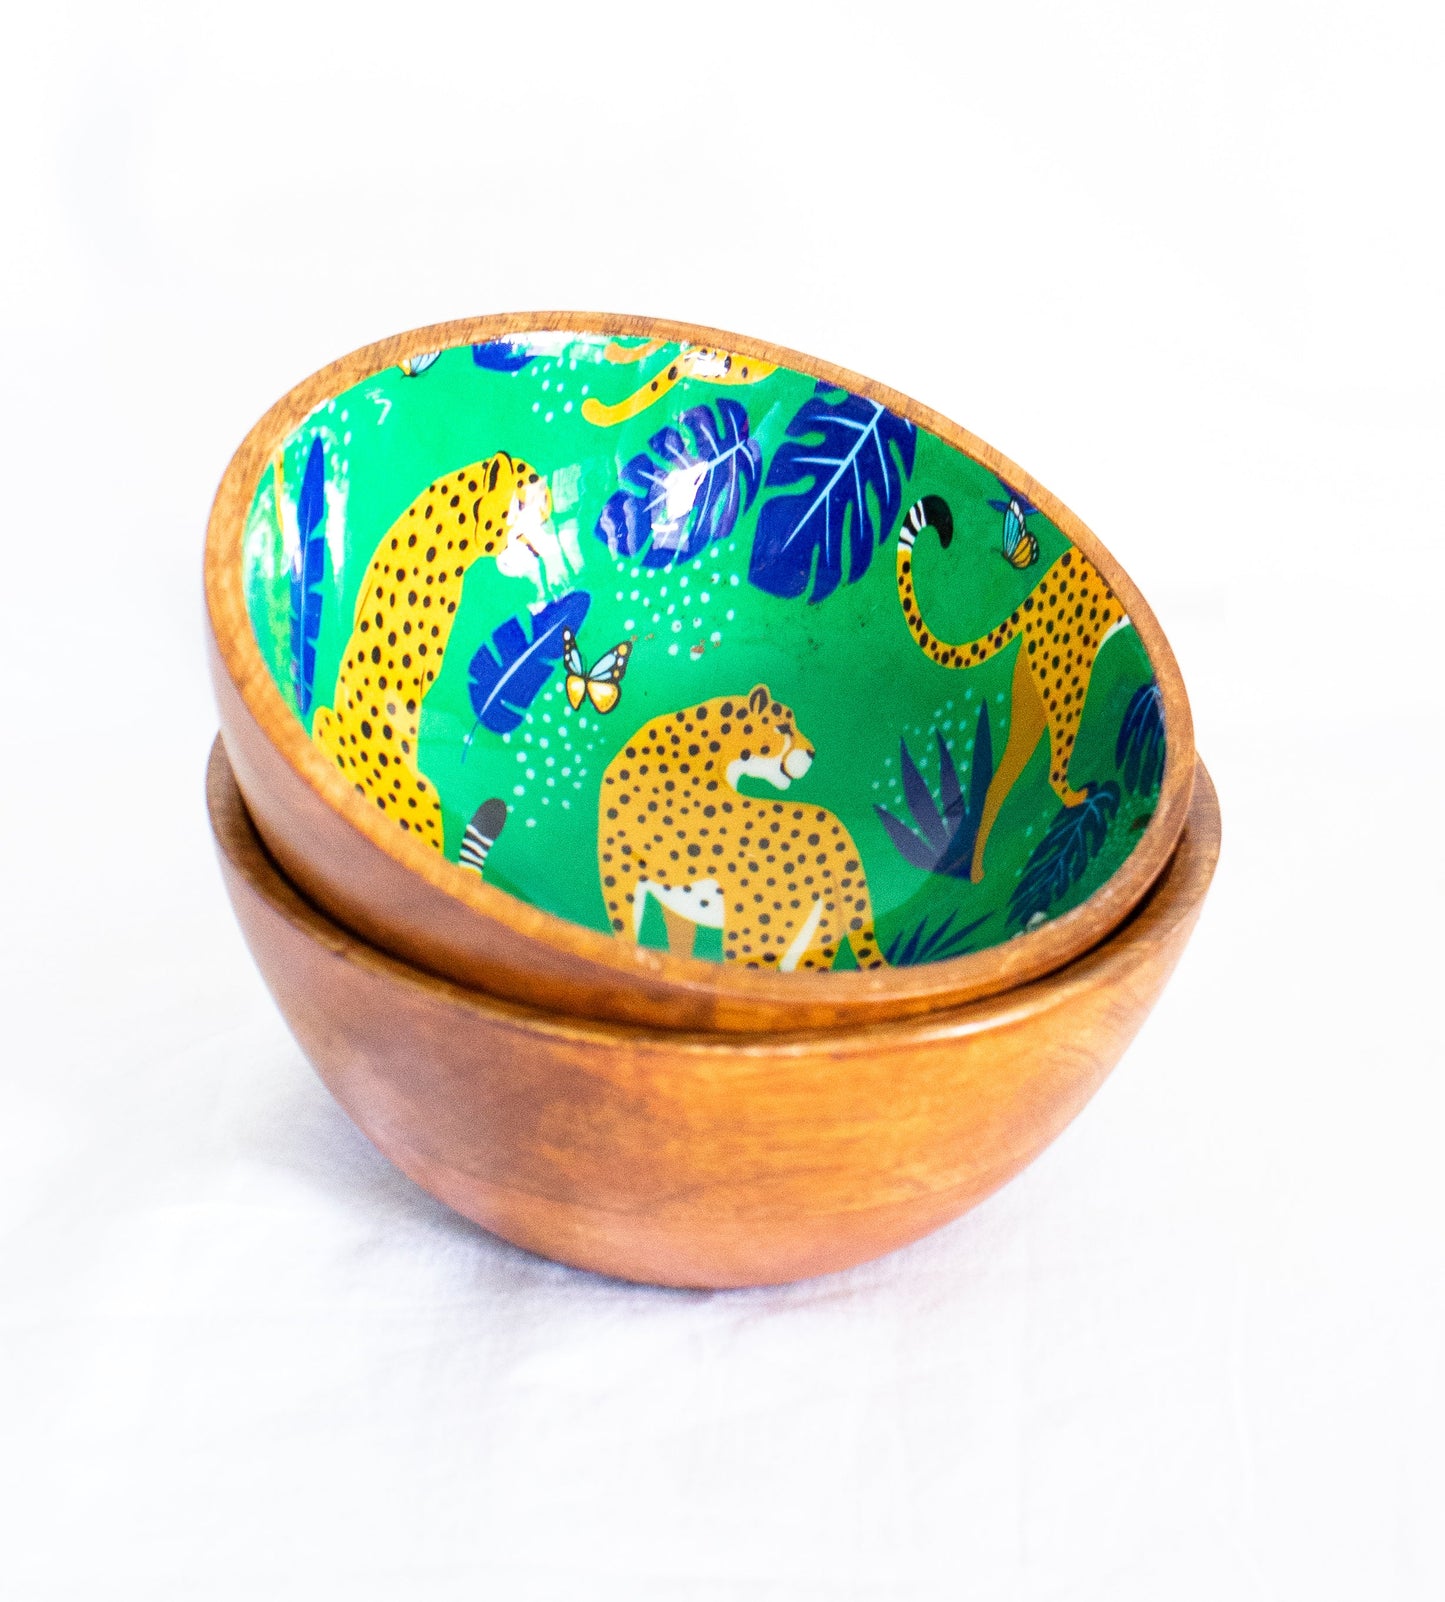 Small wood serving bowls - Mango wood bowls - Enamel printed wooden bowls - Fierce